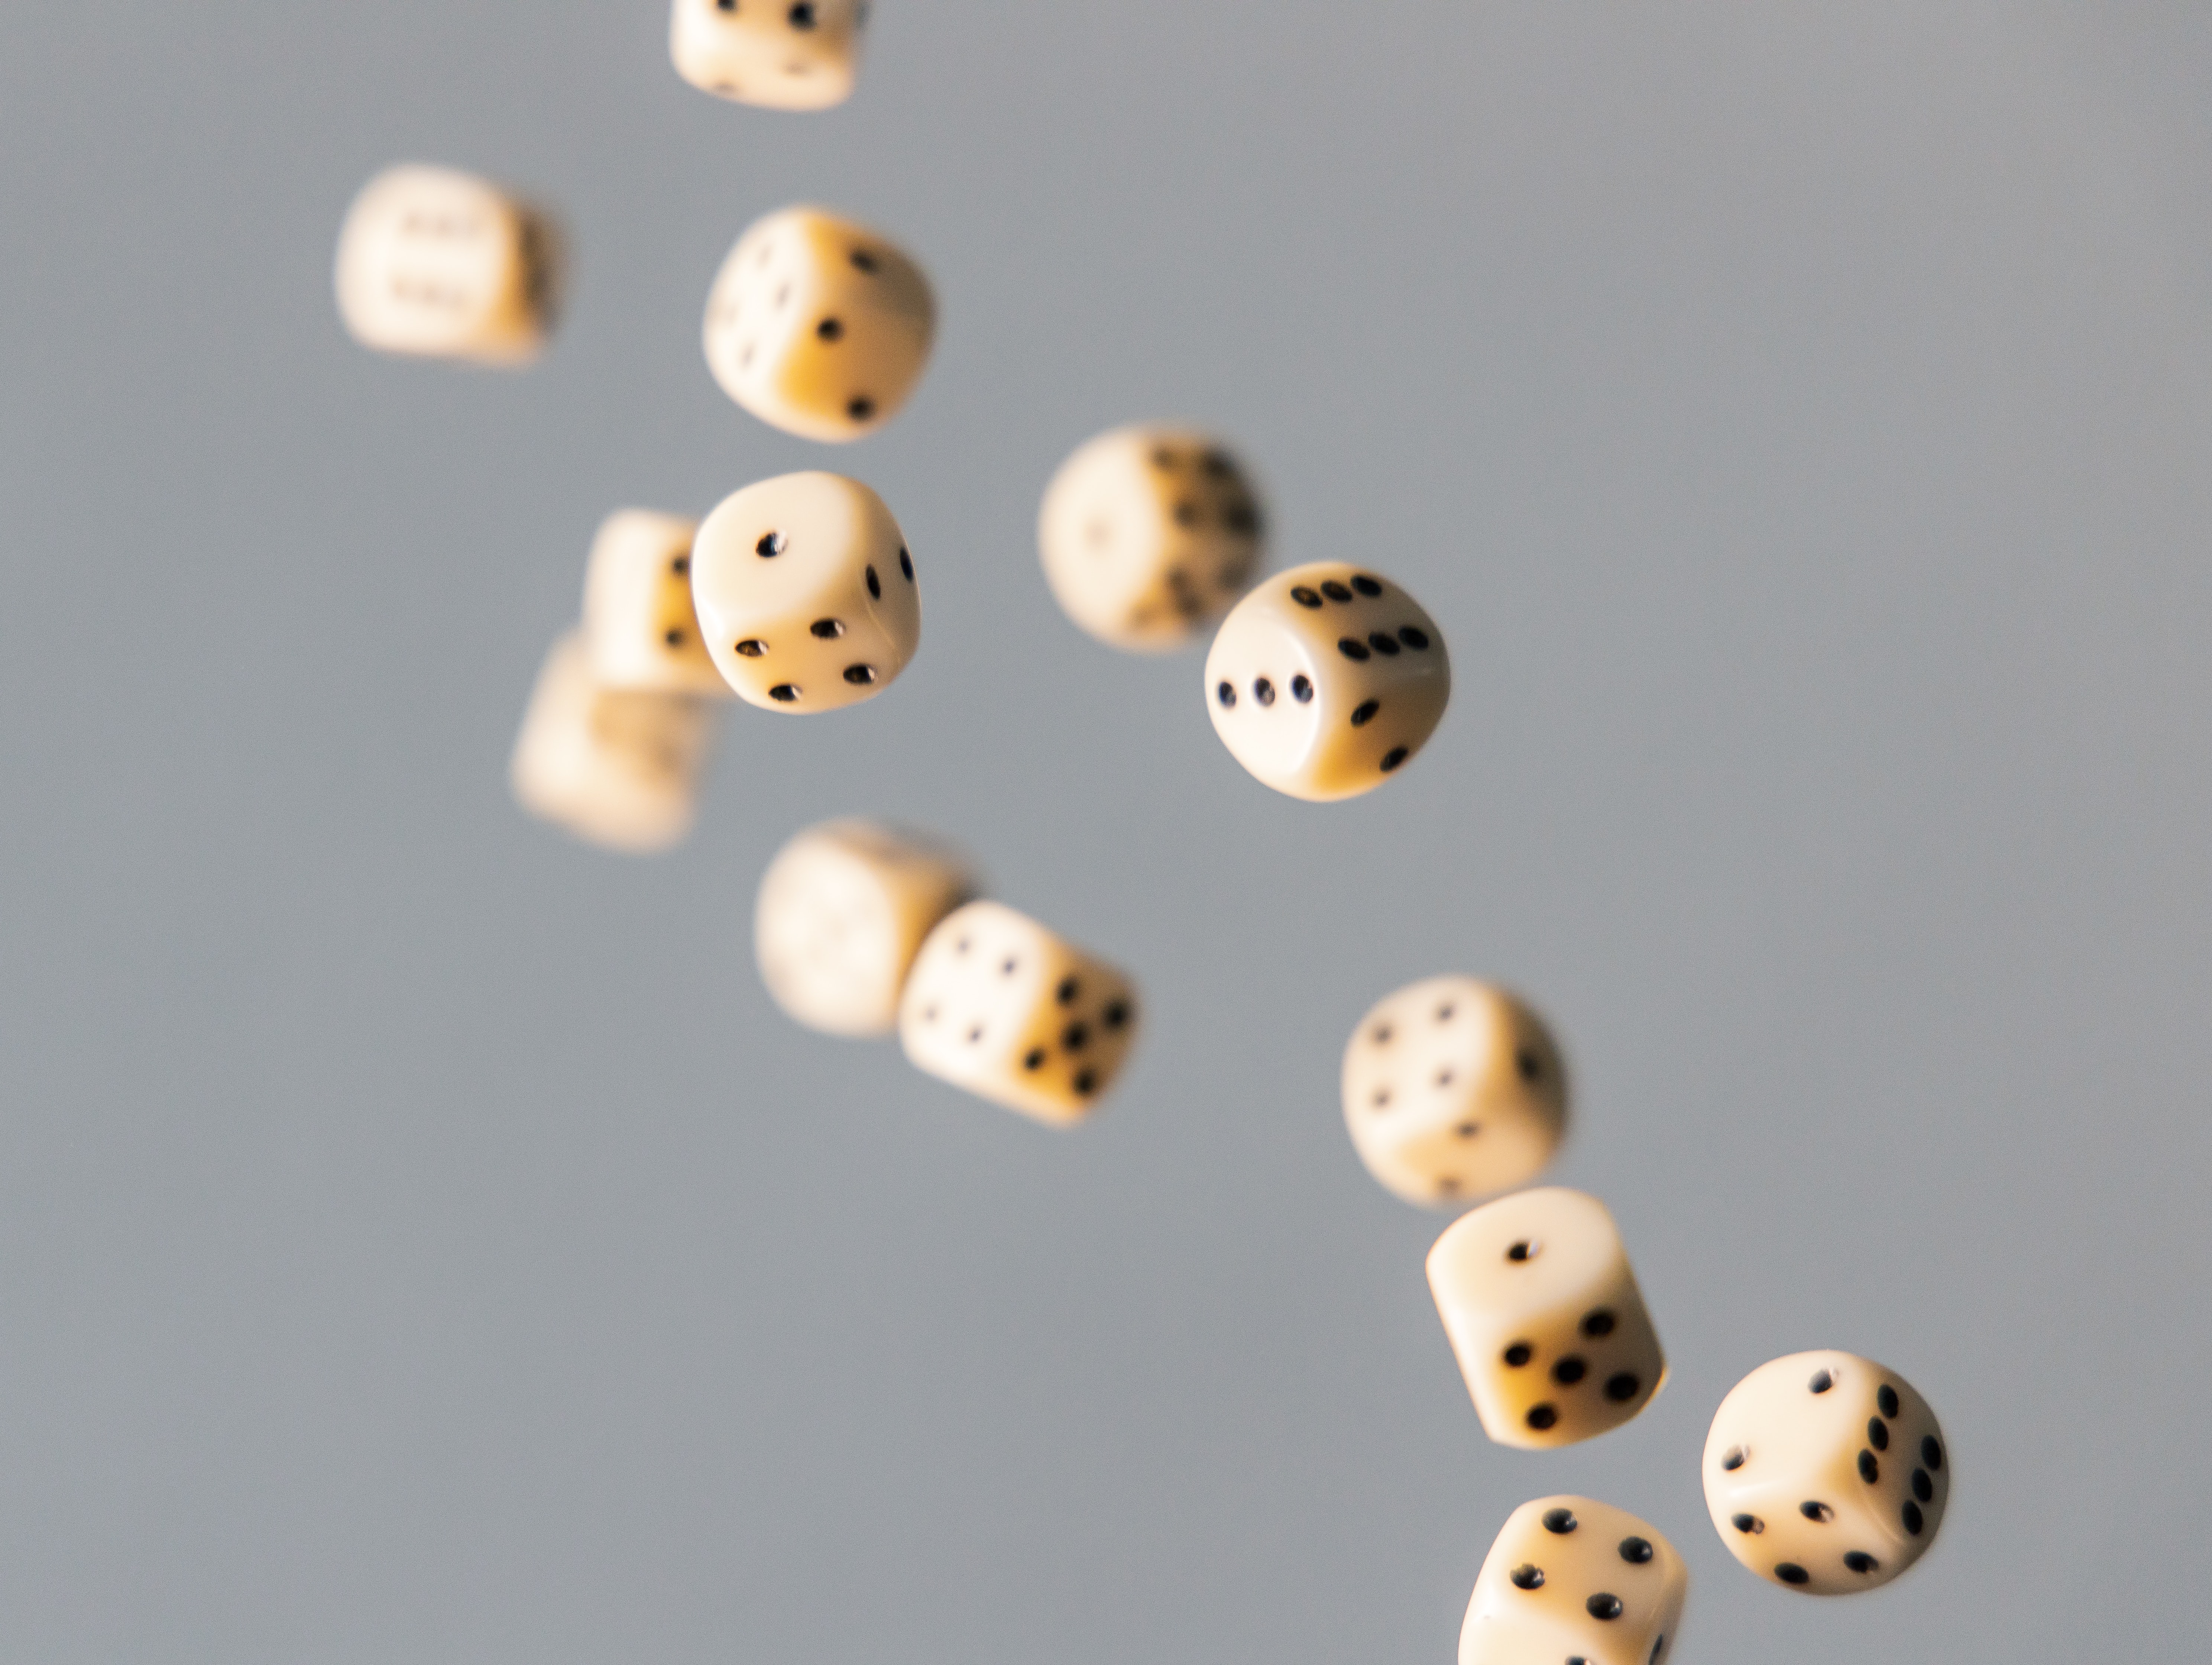 several dice falling